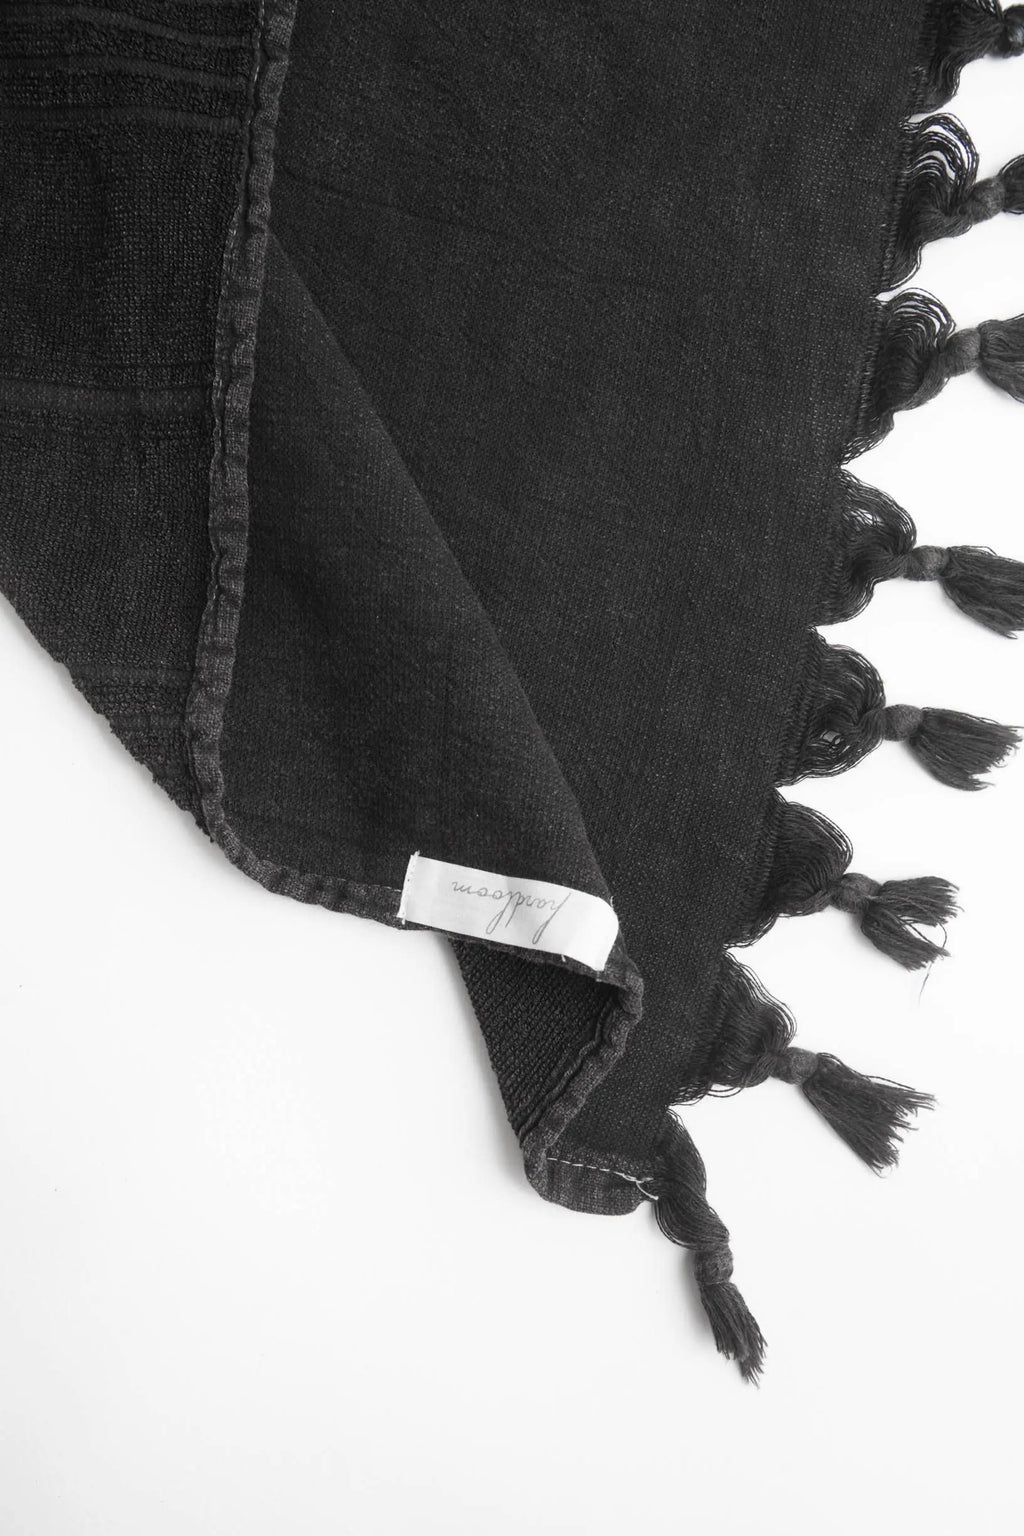 The Handloom Kayra Terry Towel - Vintage Black The Handloom